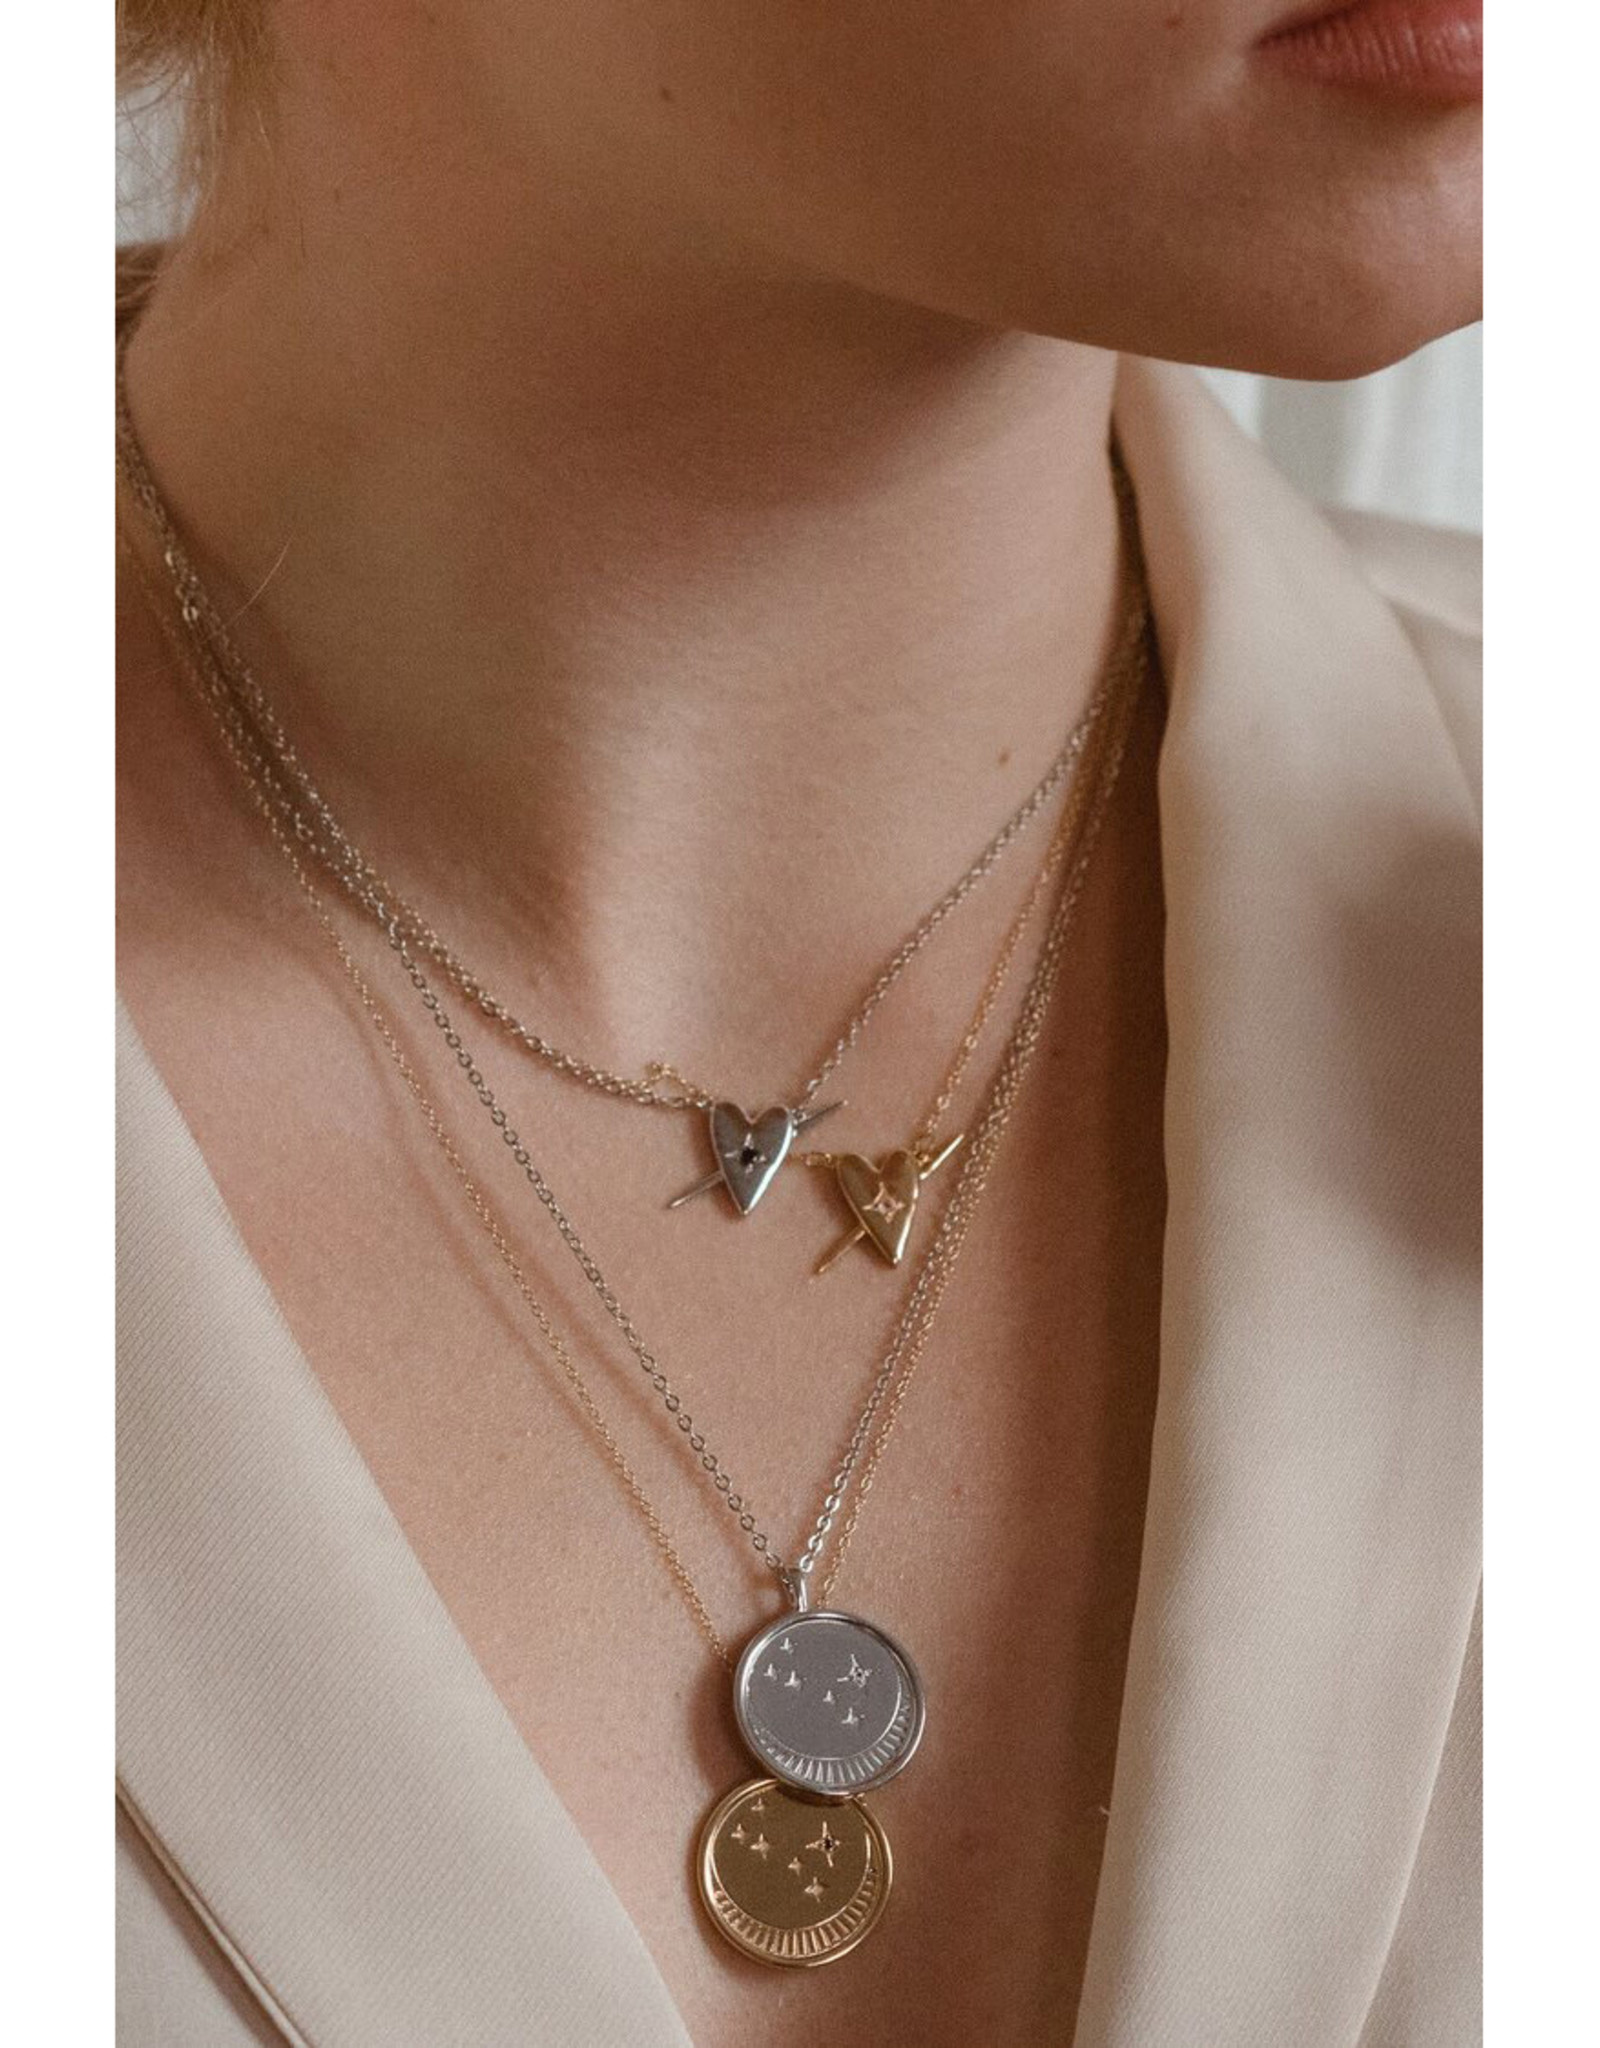 Sarah Mulder Jewelry Gold Franz Necklace - Onyx